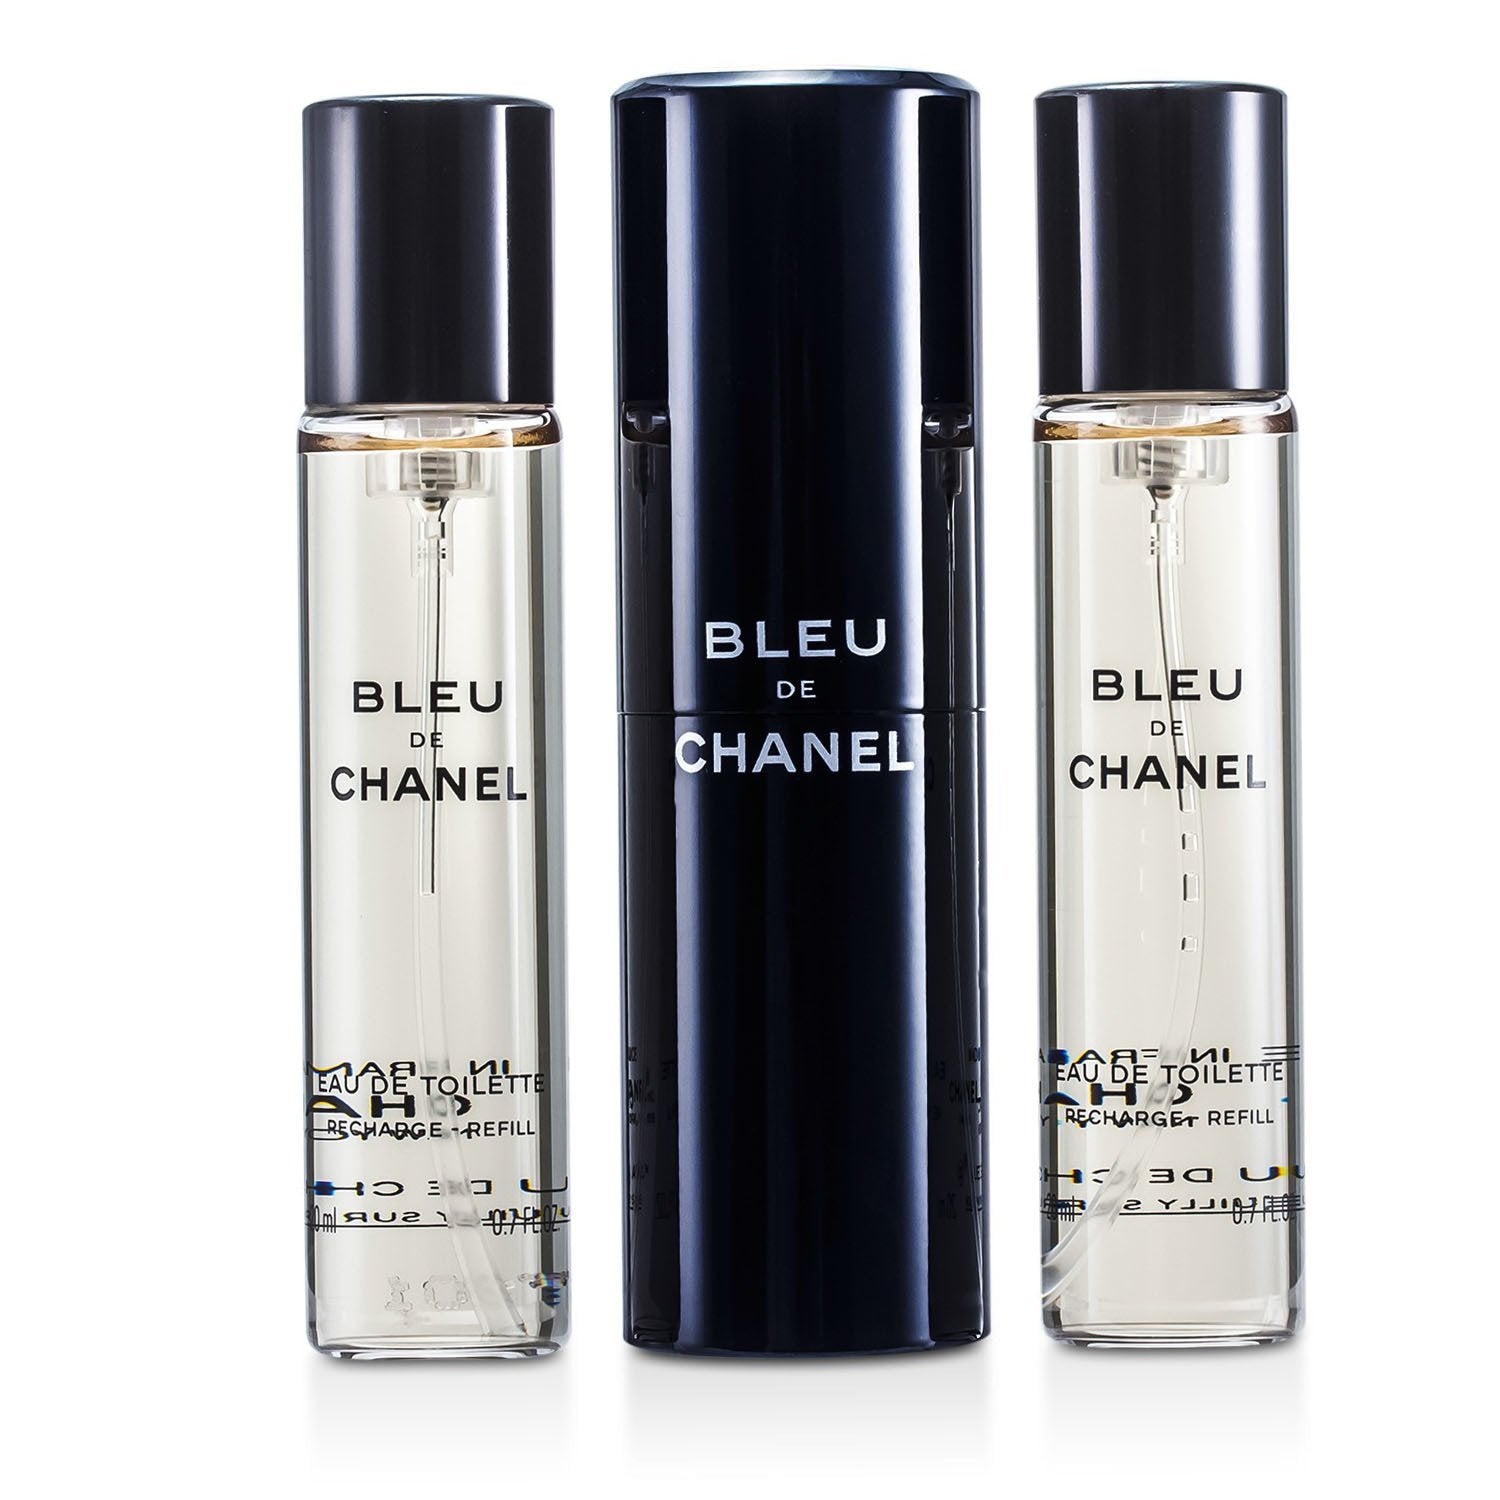 CHANEL BLEU DE CHANEL Limited Edition Parfum Spray 3.4 oz